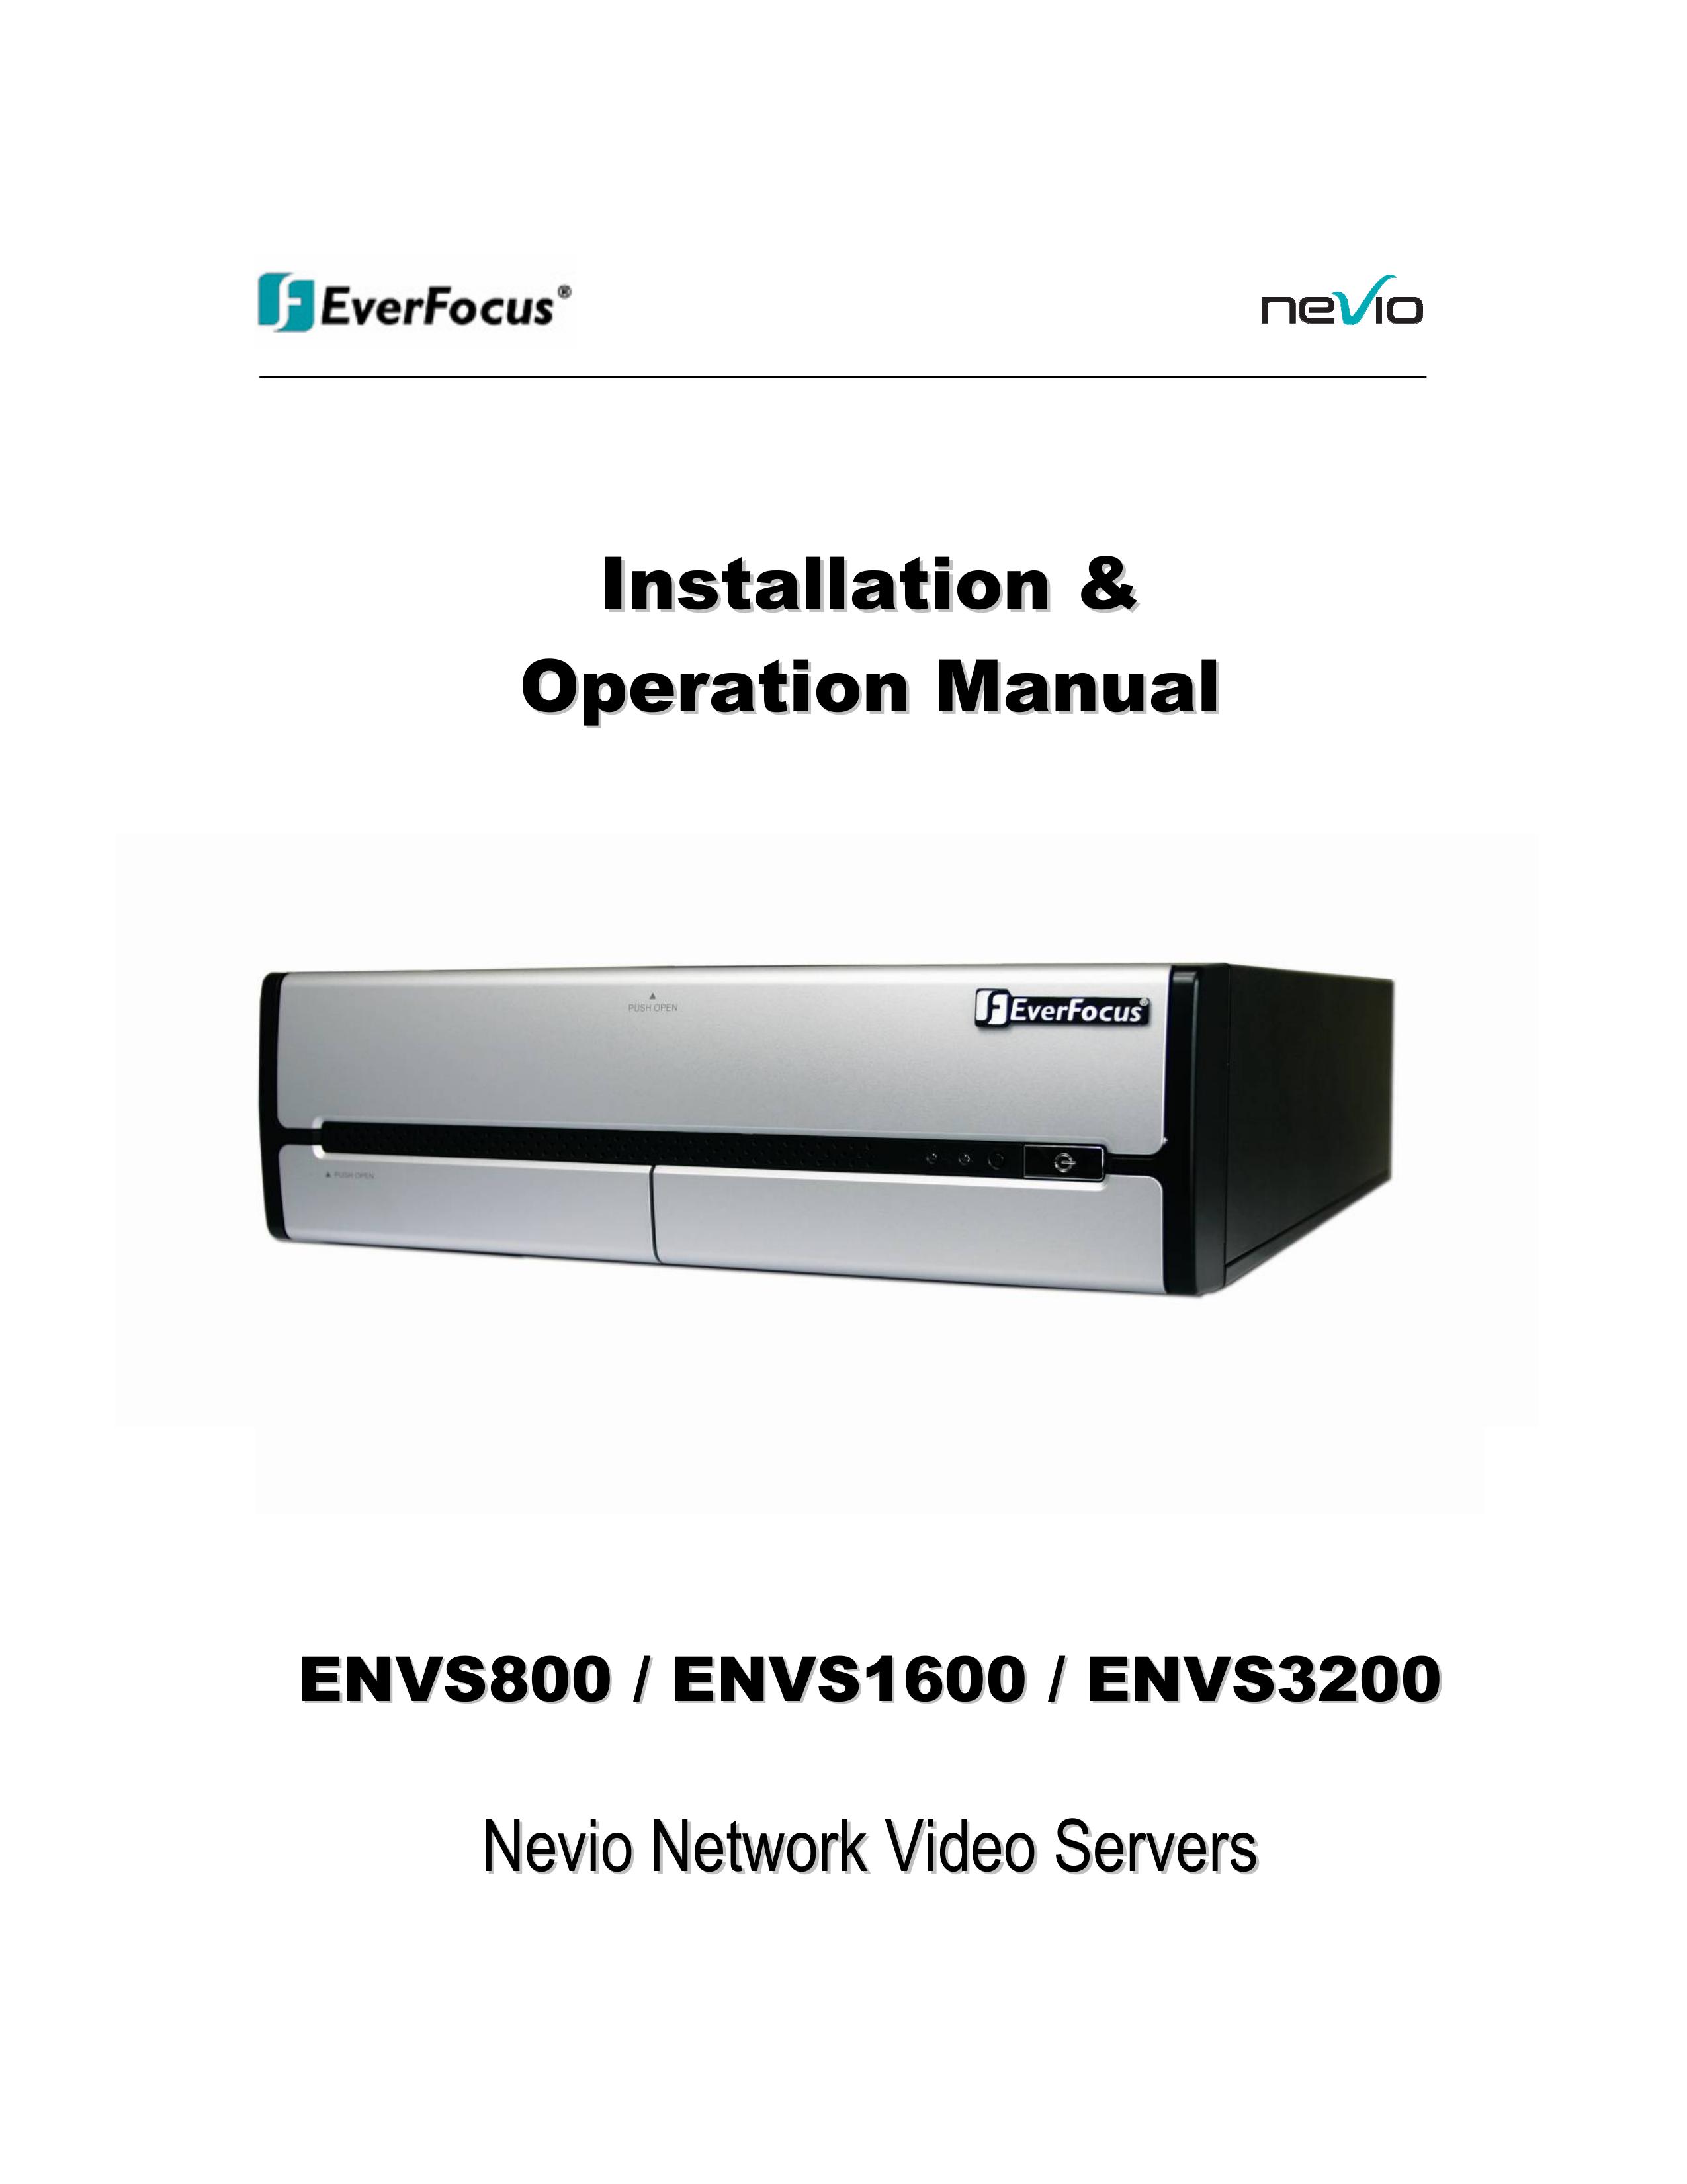 EverFocus ENVS1600 Security Camera User Manual